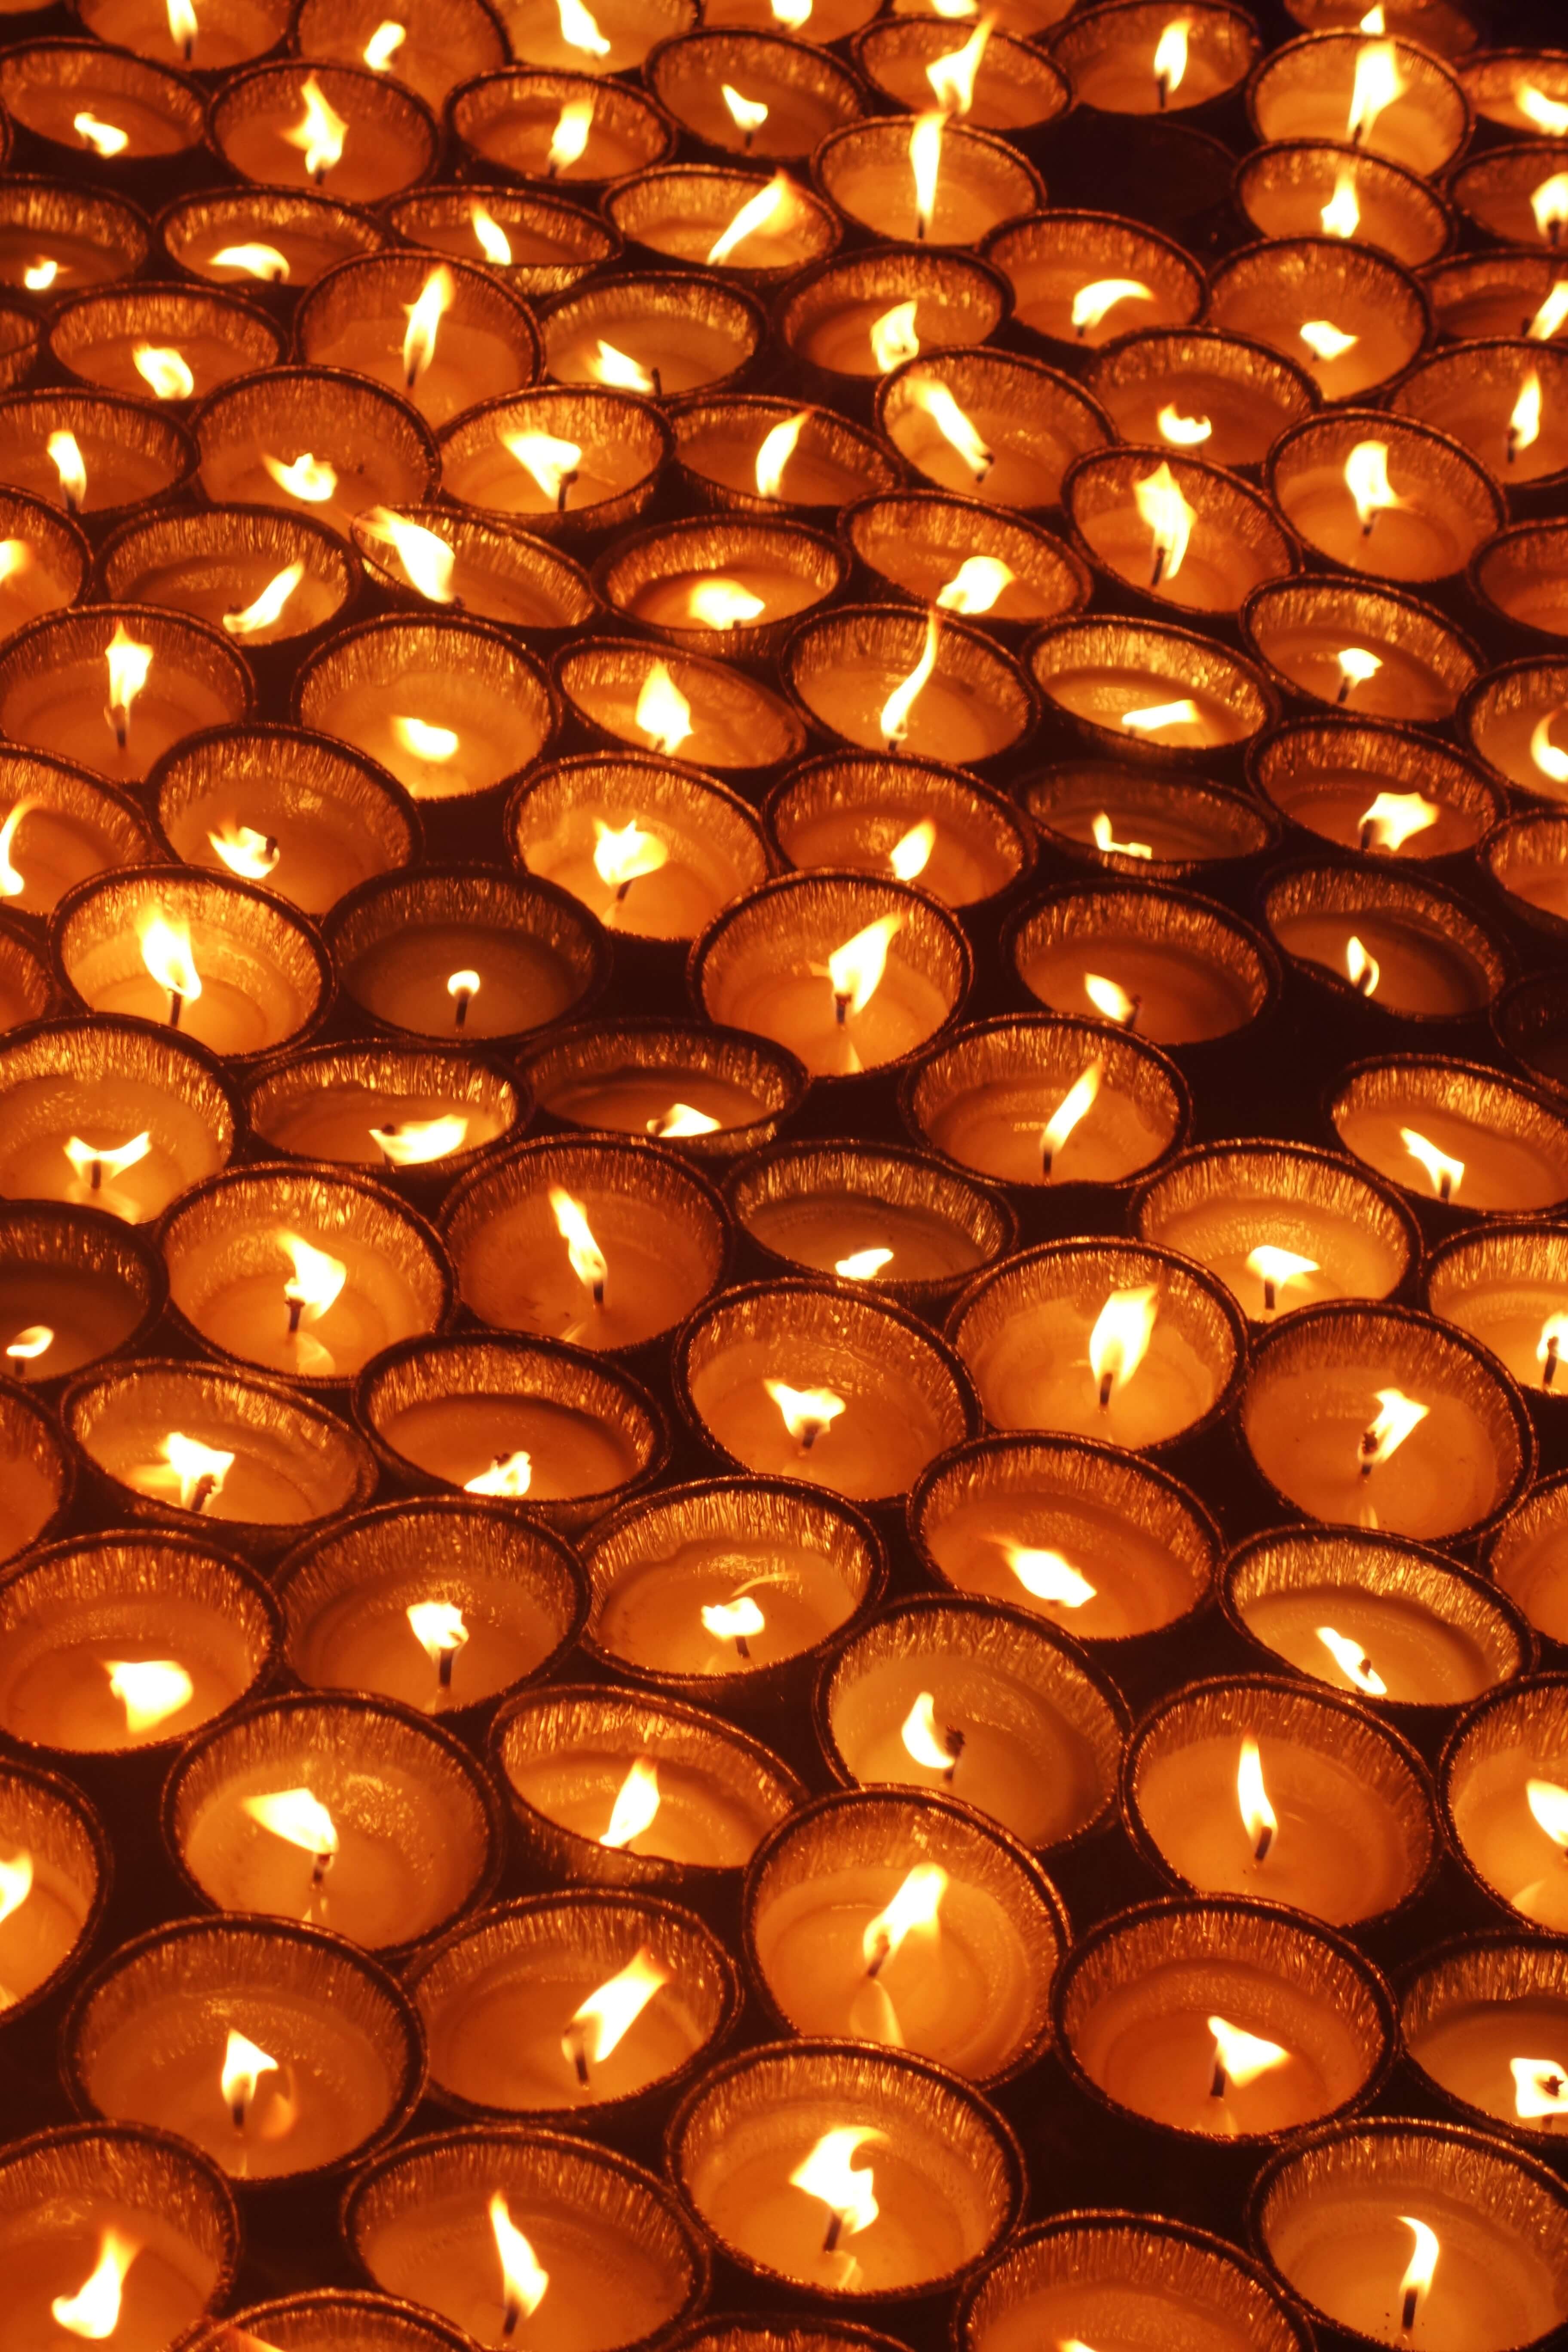 Five Days of Diwali 